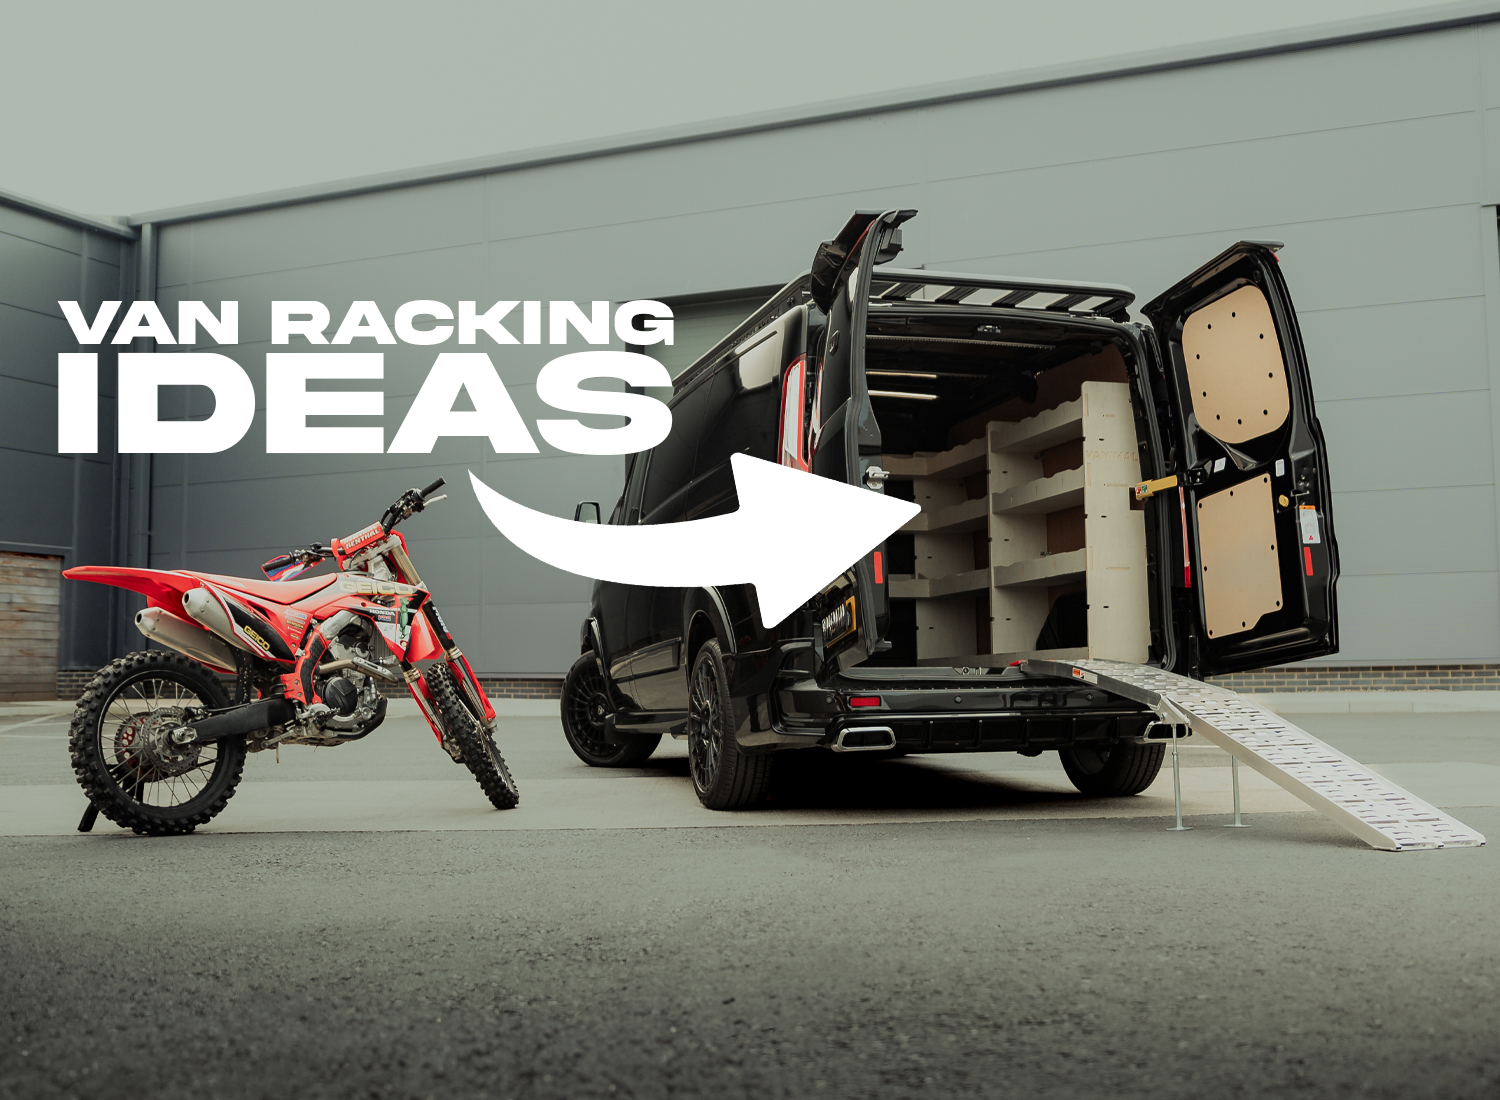 Van racking - how do you do yours?